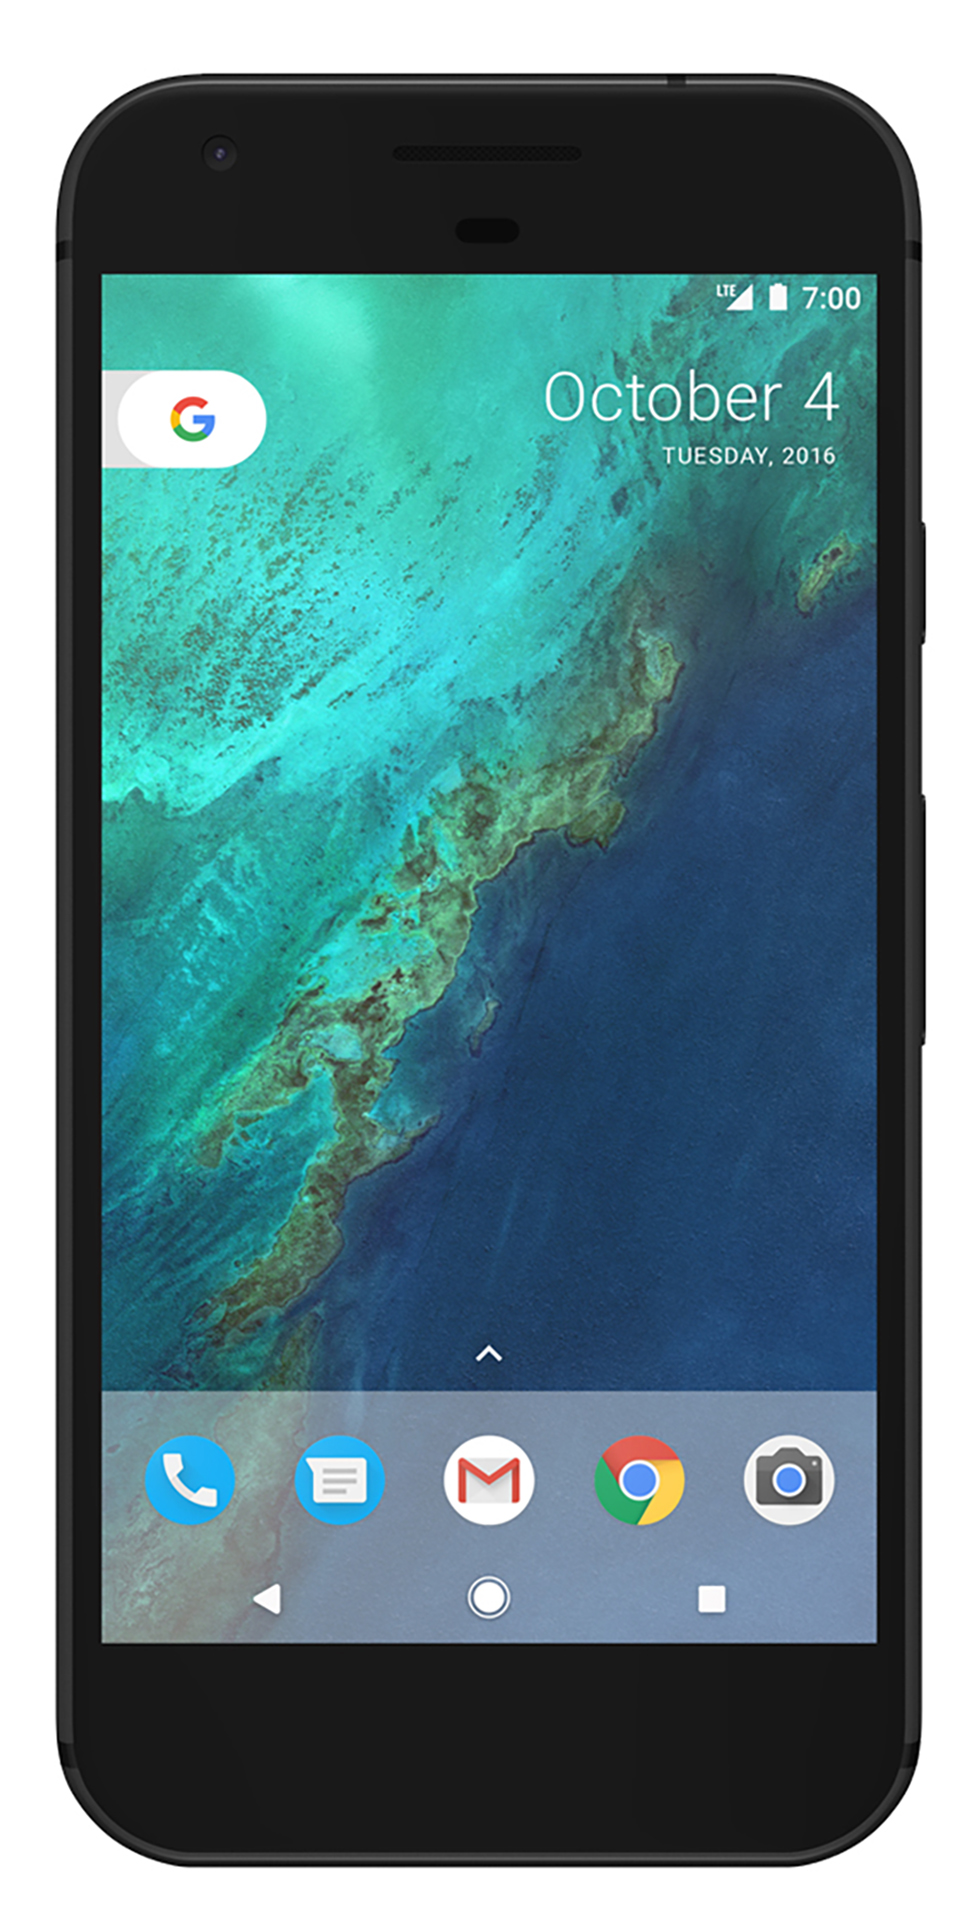 Google Pixel XL 128GB Unlocked GSM Phone w/ 12.3MP Camera - Quite Black - image 1 of 4